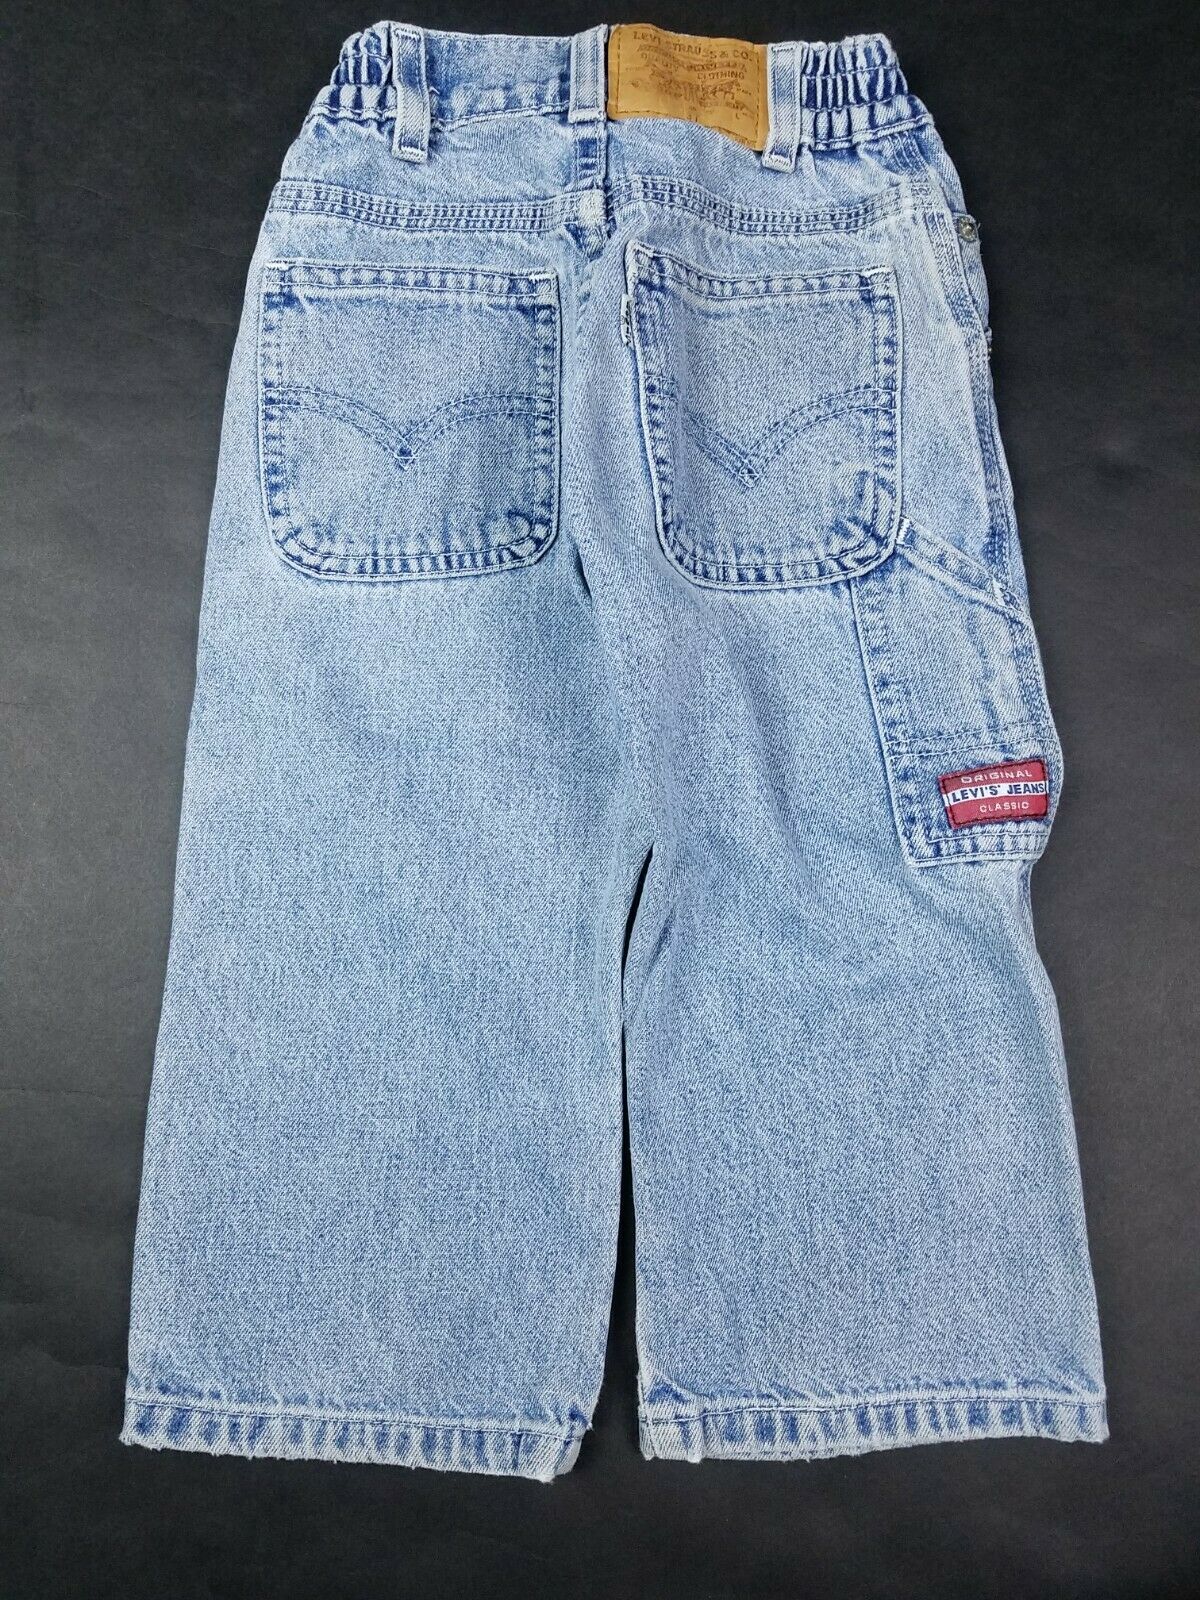 Levi's Toddler Size 3t White Tab Side Elastic Blue Jeans Vintage 1998 90s